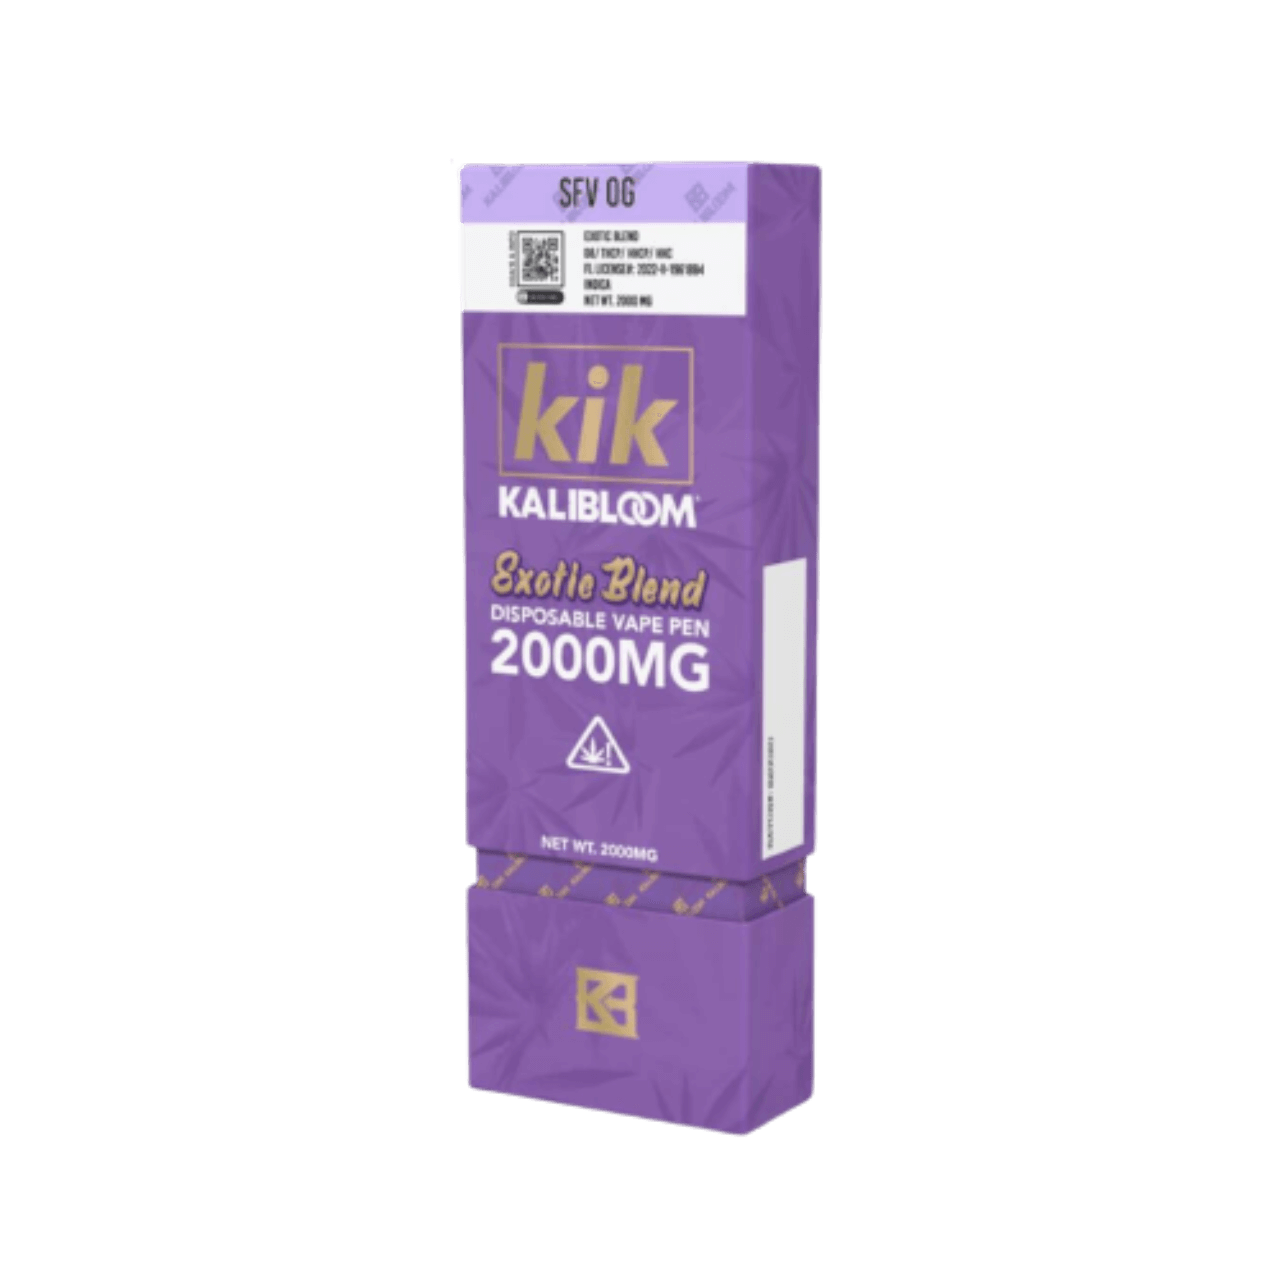 Kalibloom Kik x Packwoods HHC THC Disposable Vape